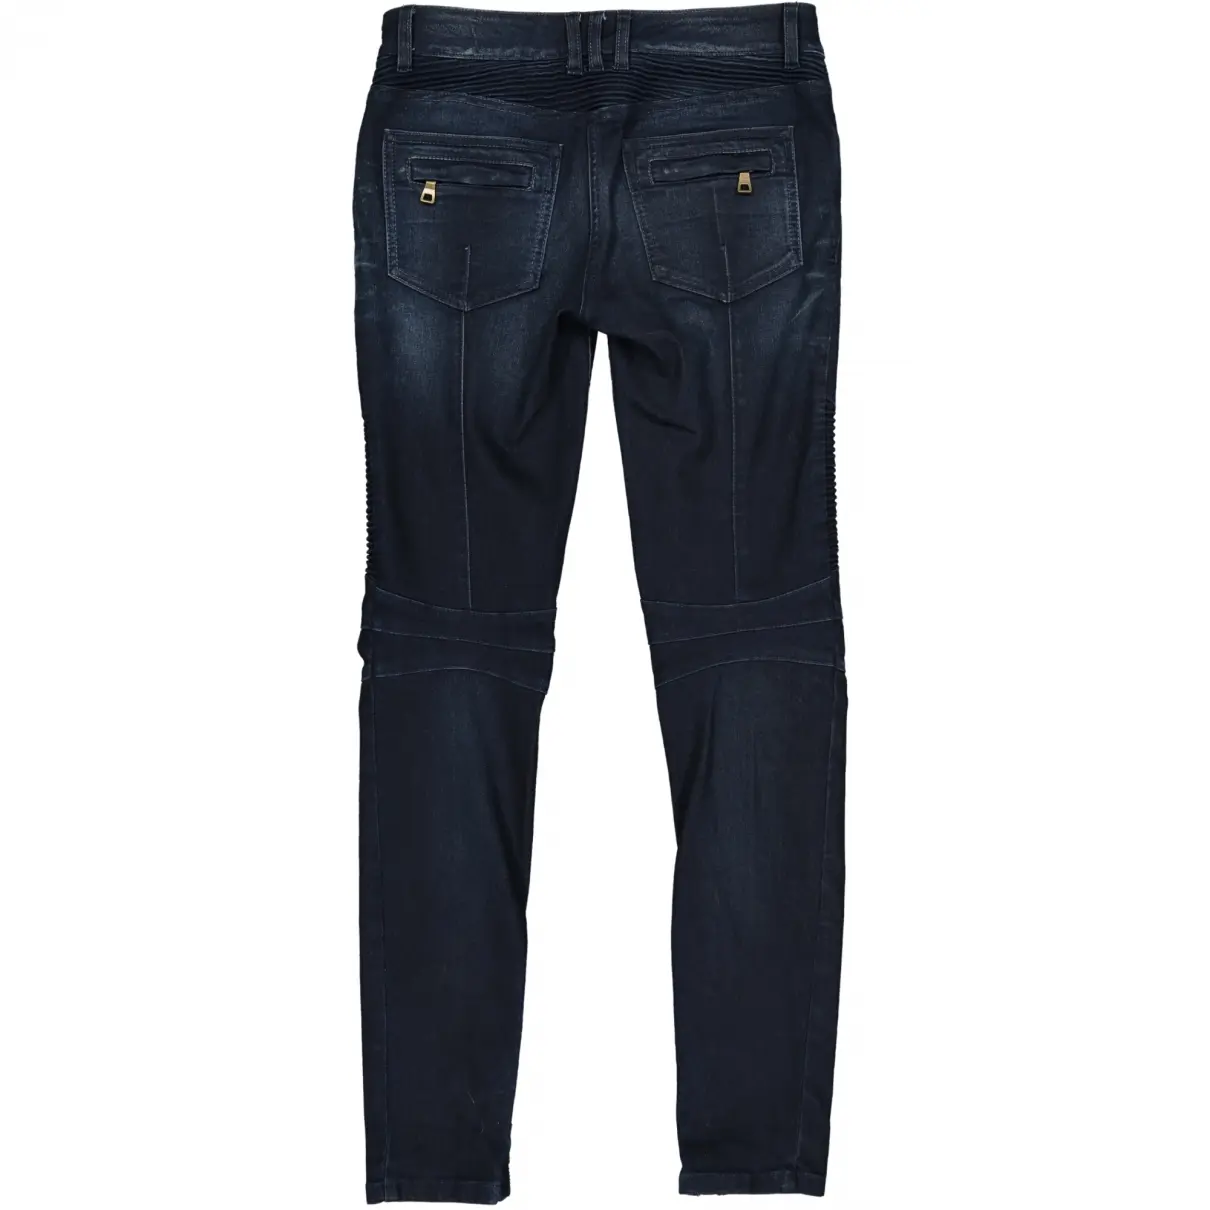 Balmain Slim jeans for sale